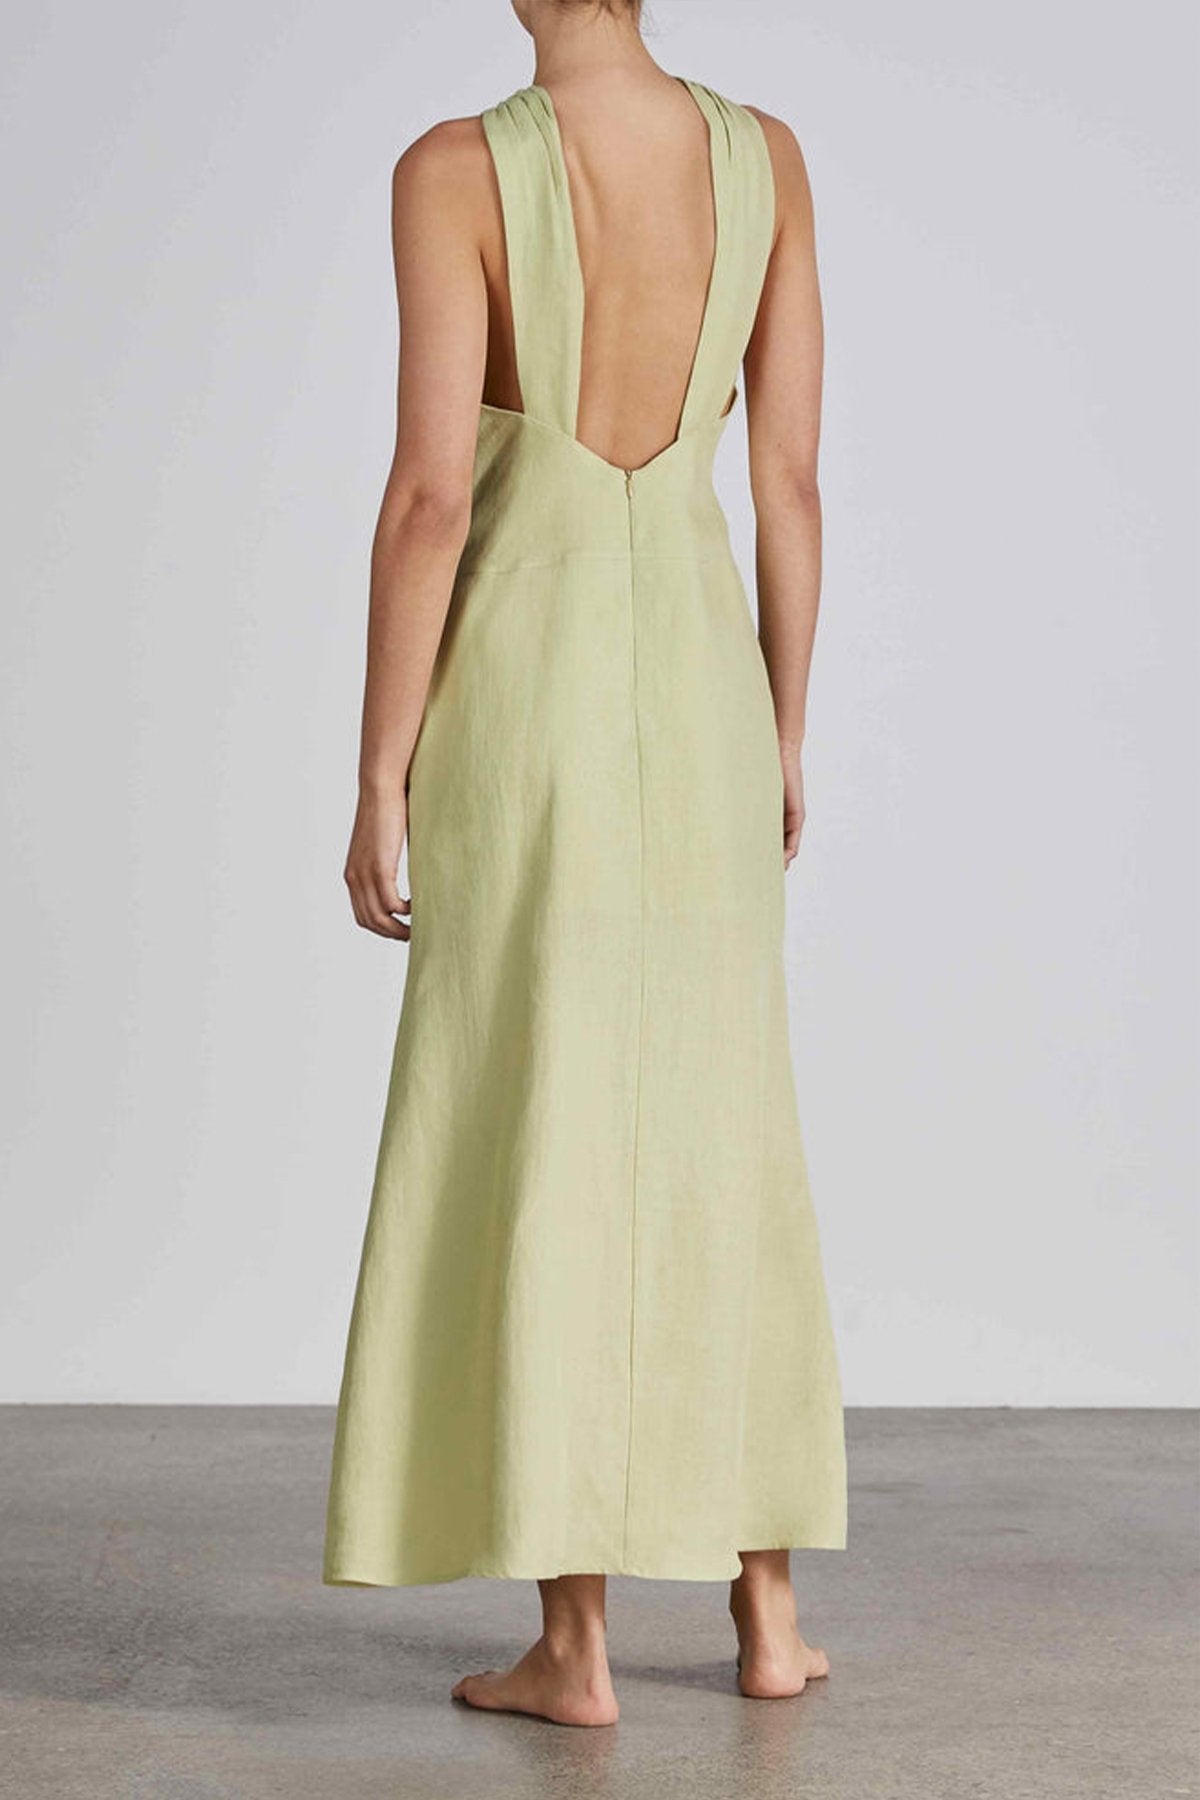 Milos Organic Linen Dress in Lime - shop-olivia.com